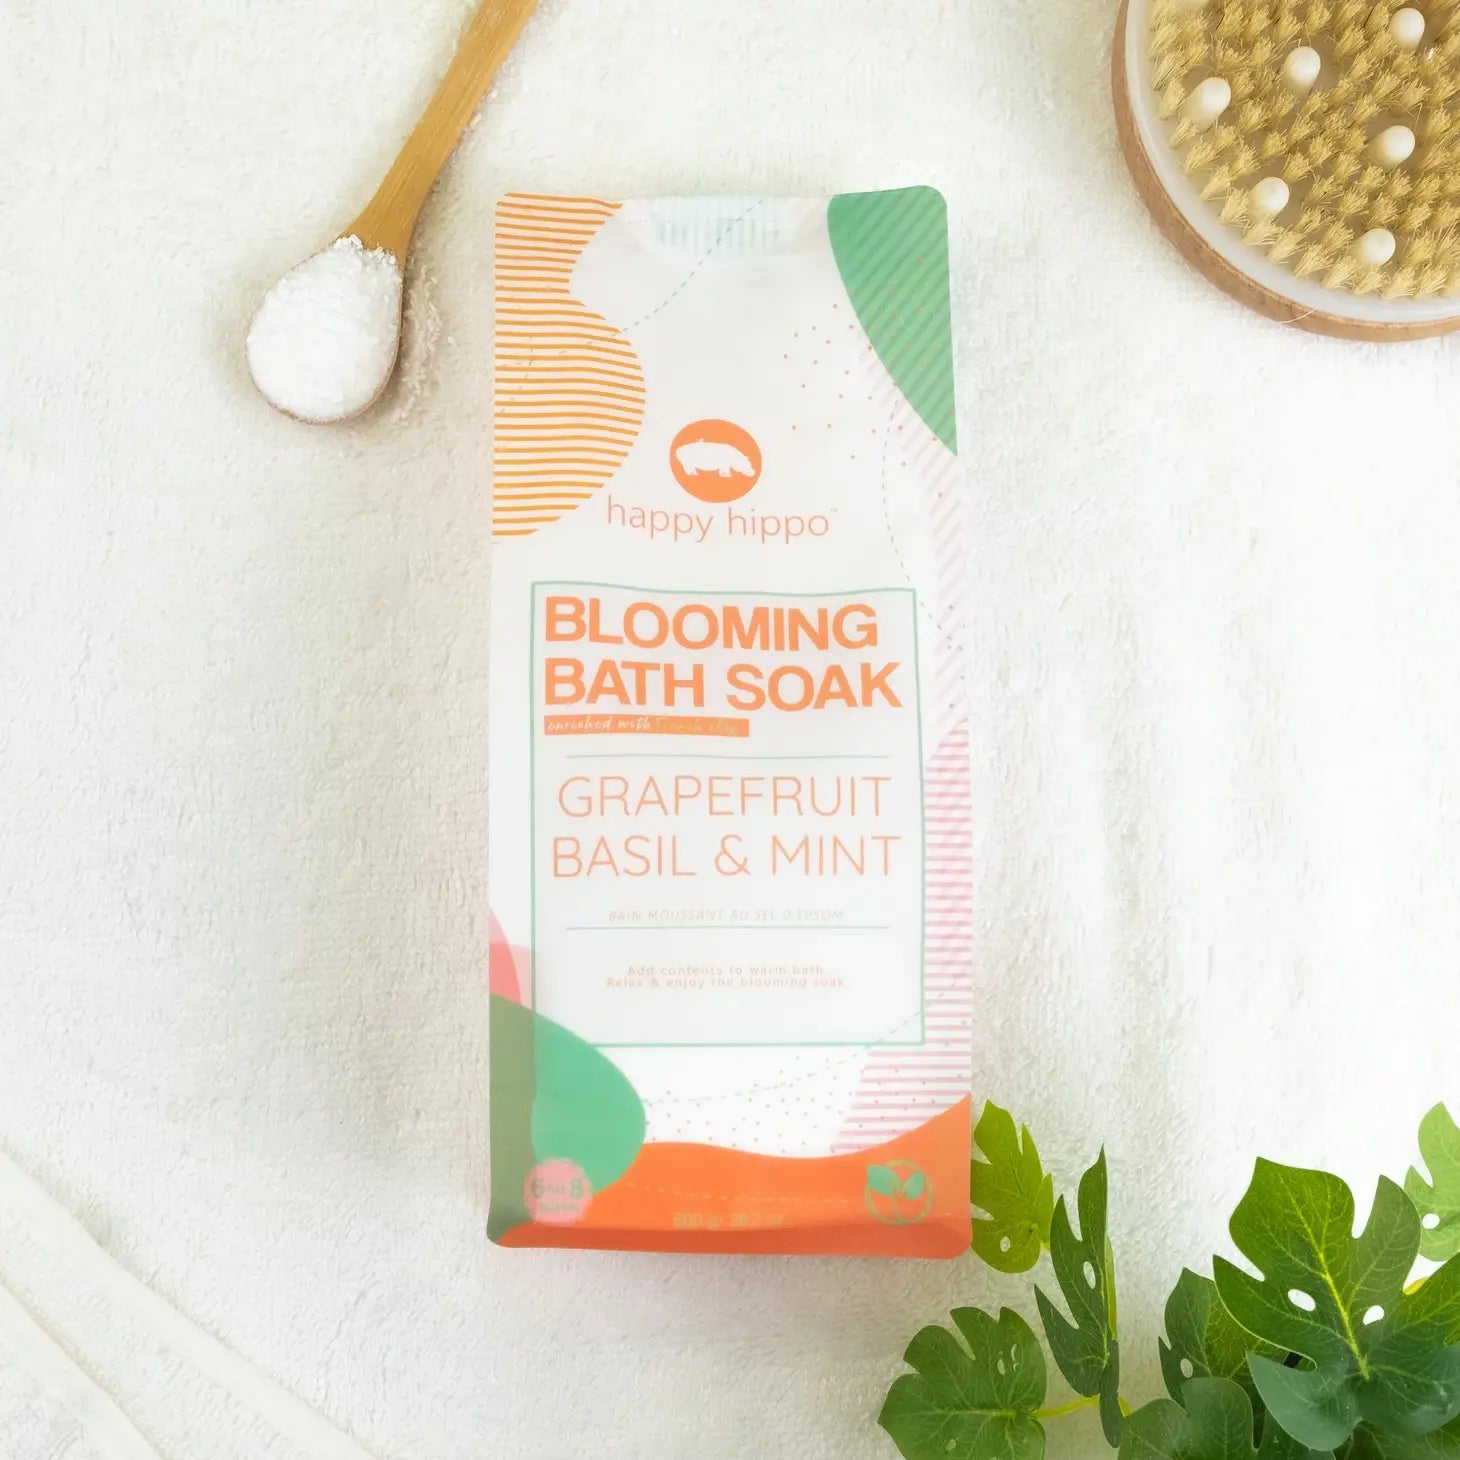 Grapefruit Basil & Mint-Blooming Bath Soak 800g - Lulie